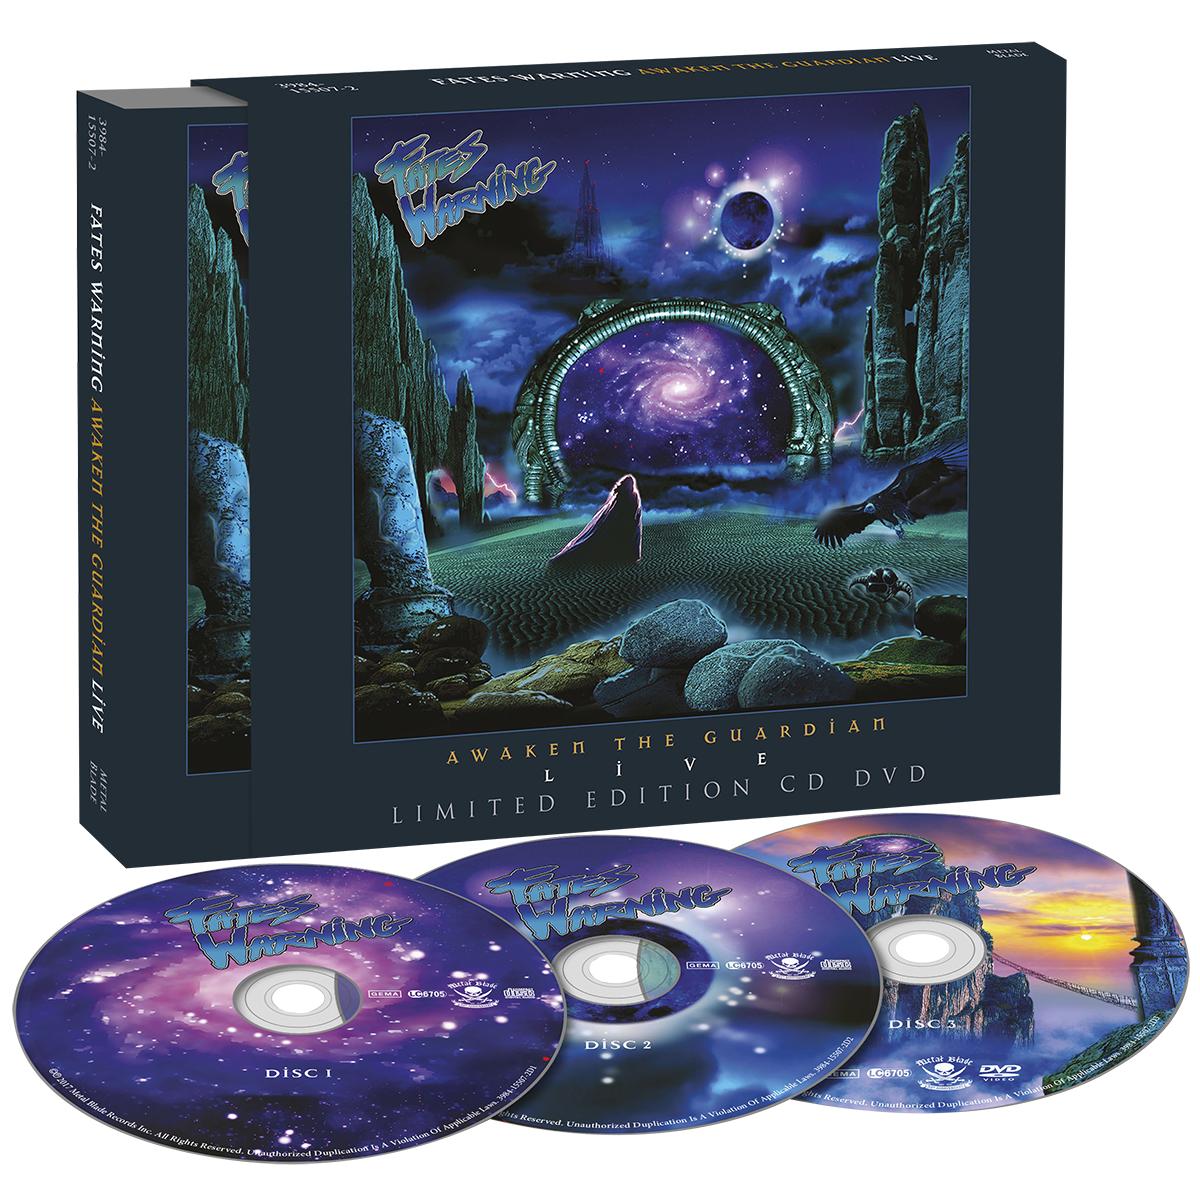 Fates Warning "Awaken The Guardian Live" 2CD/DVD